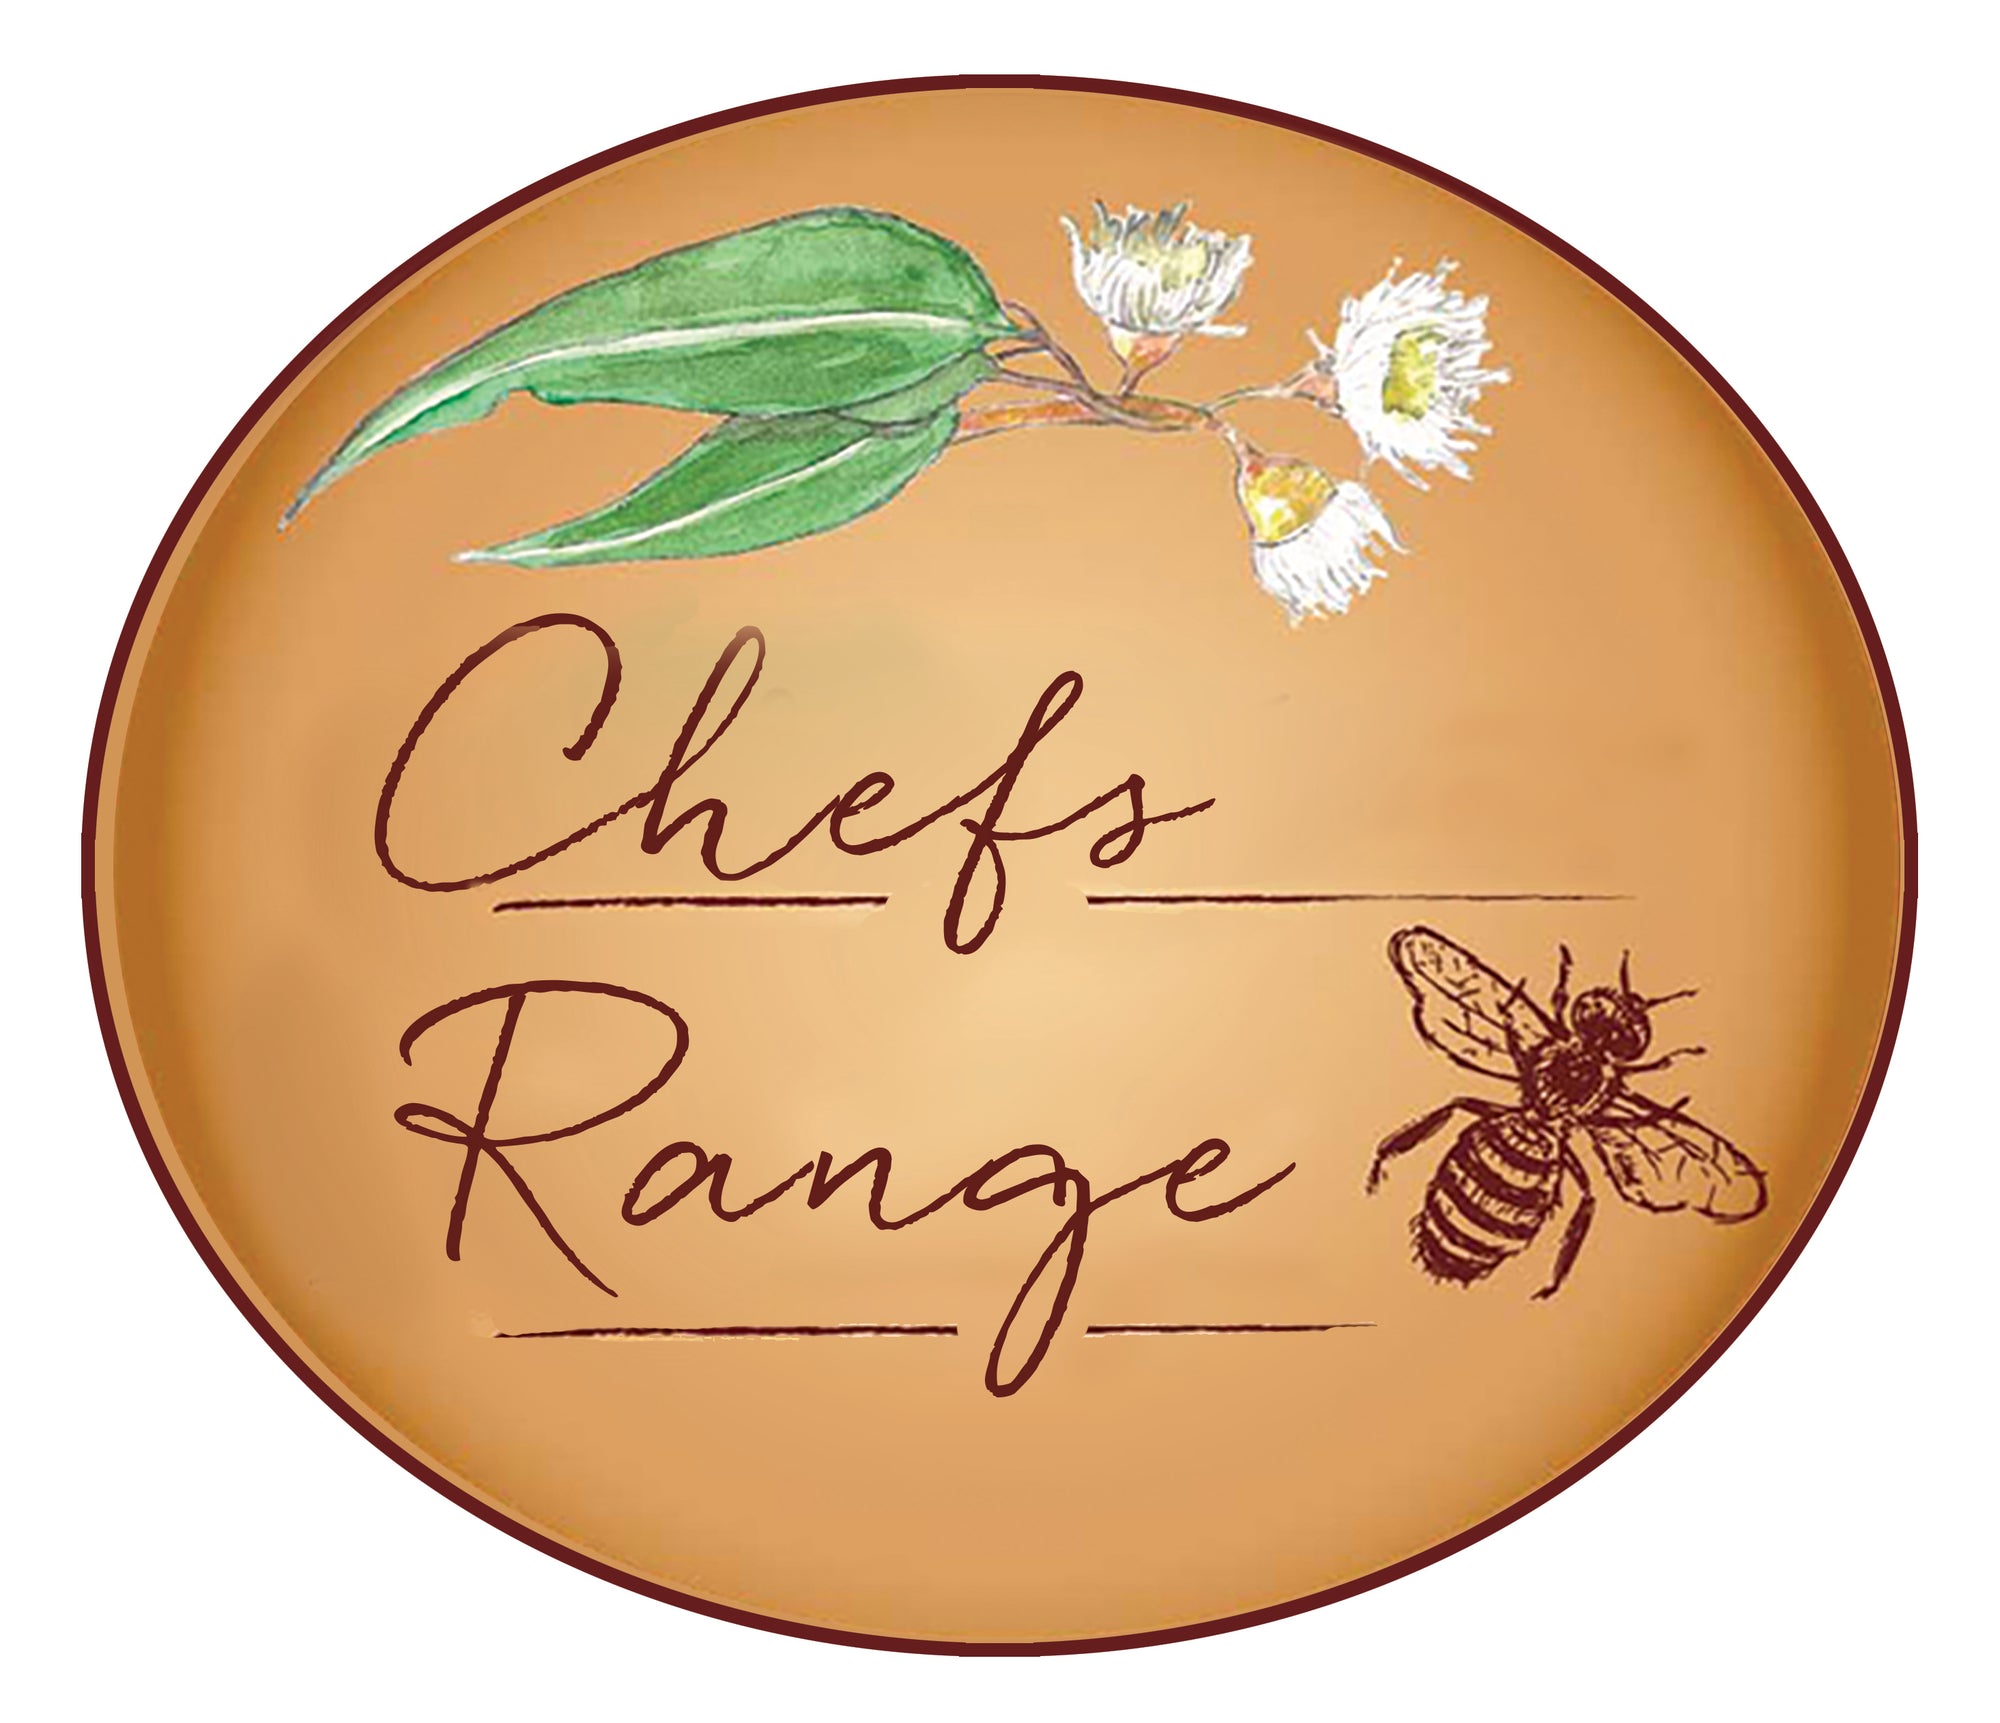 Chefs Range